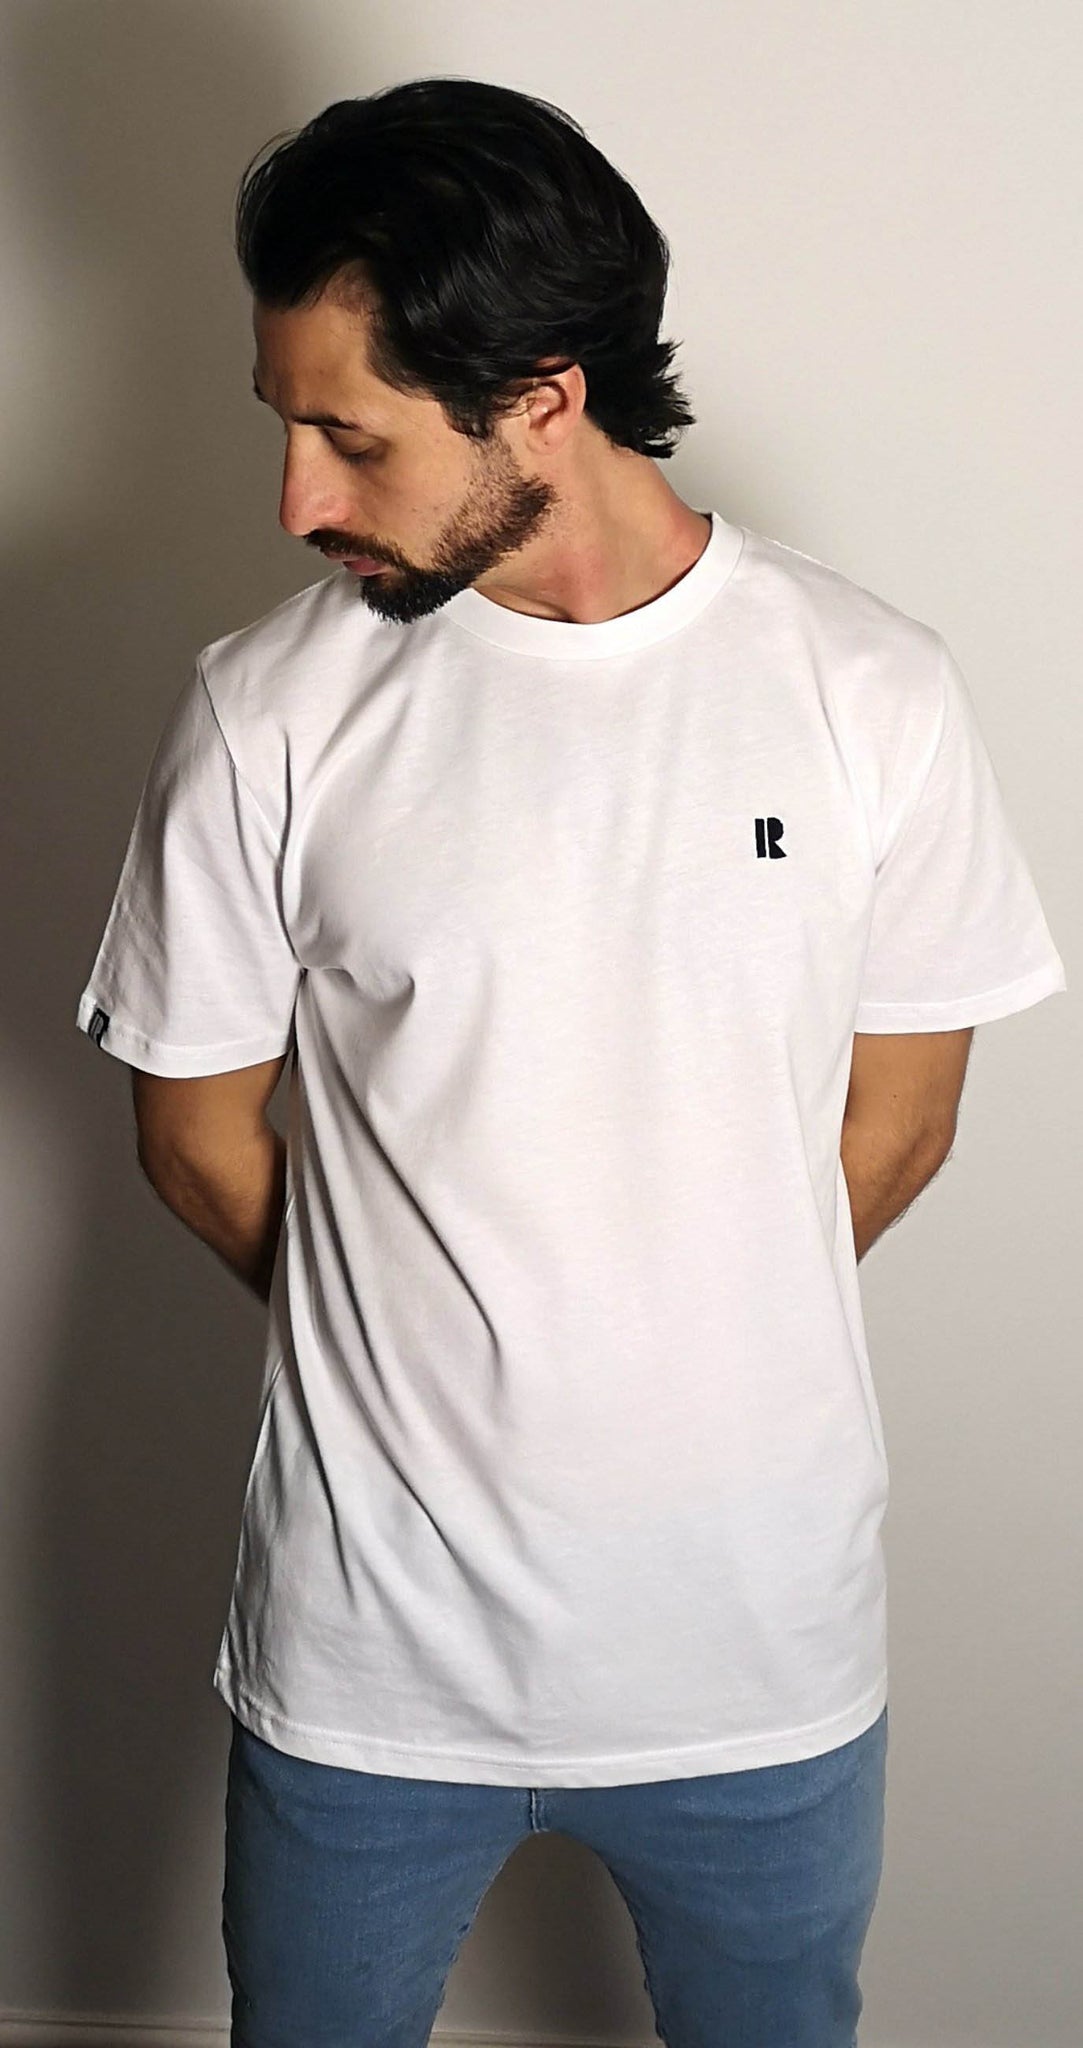 Man model wearing white Rhetorik T-shirt with mini-R embroidered